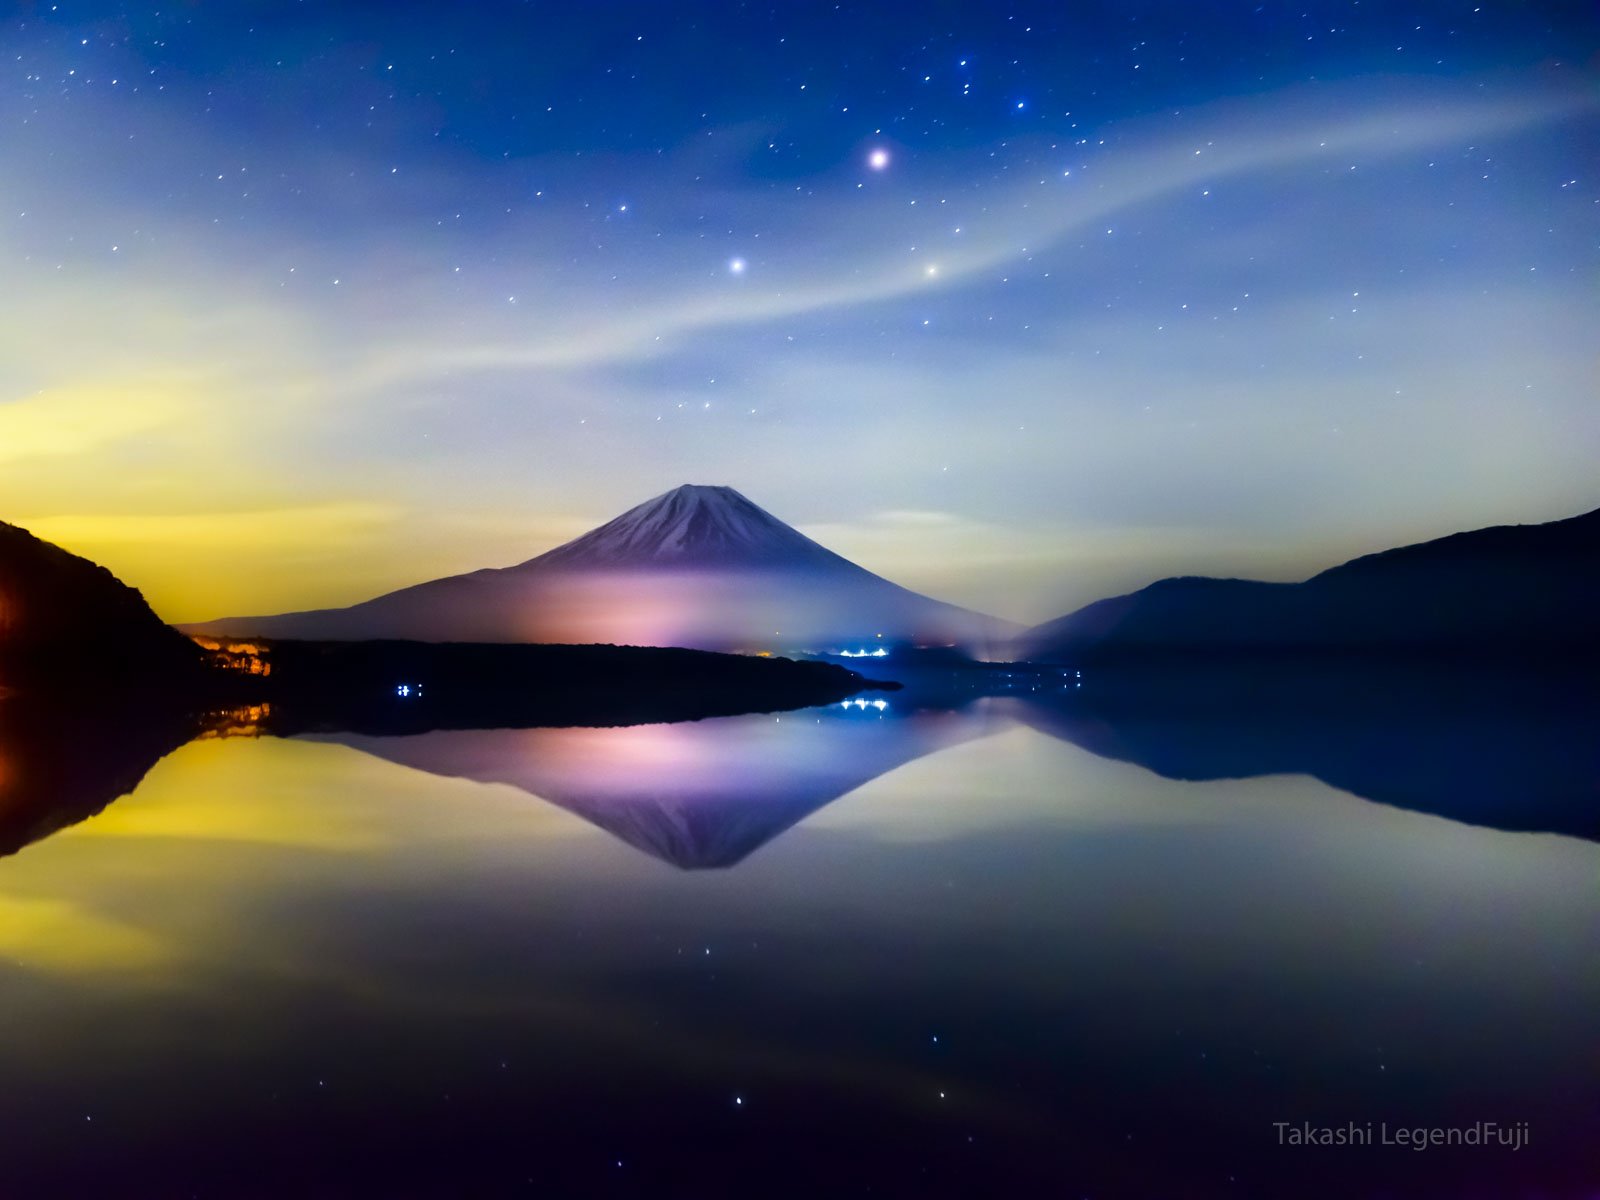 fuji,mountain,lake,water,reflection,cloud,night,space,universe,blue,purple,sky, Takashi